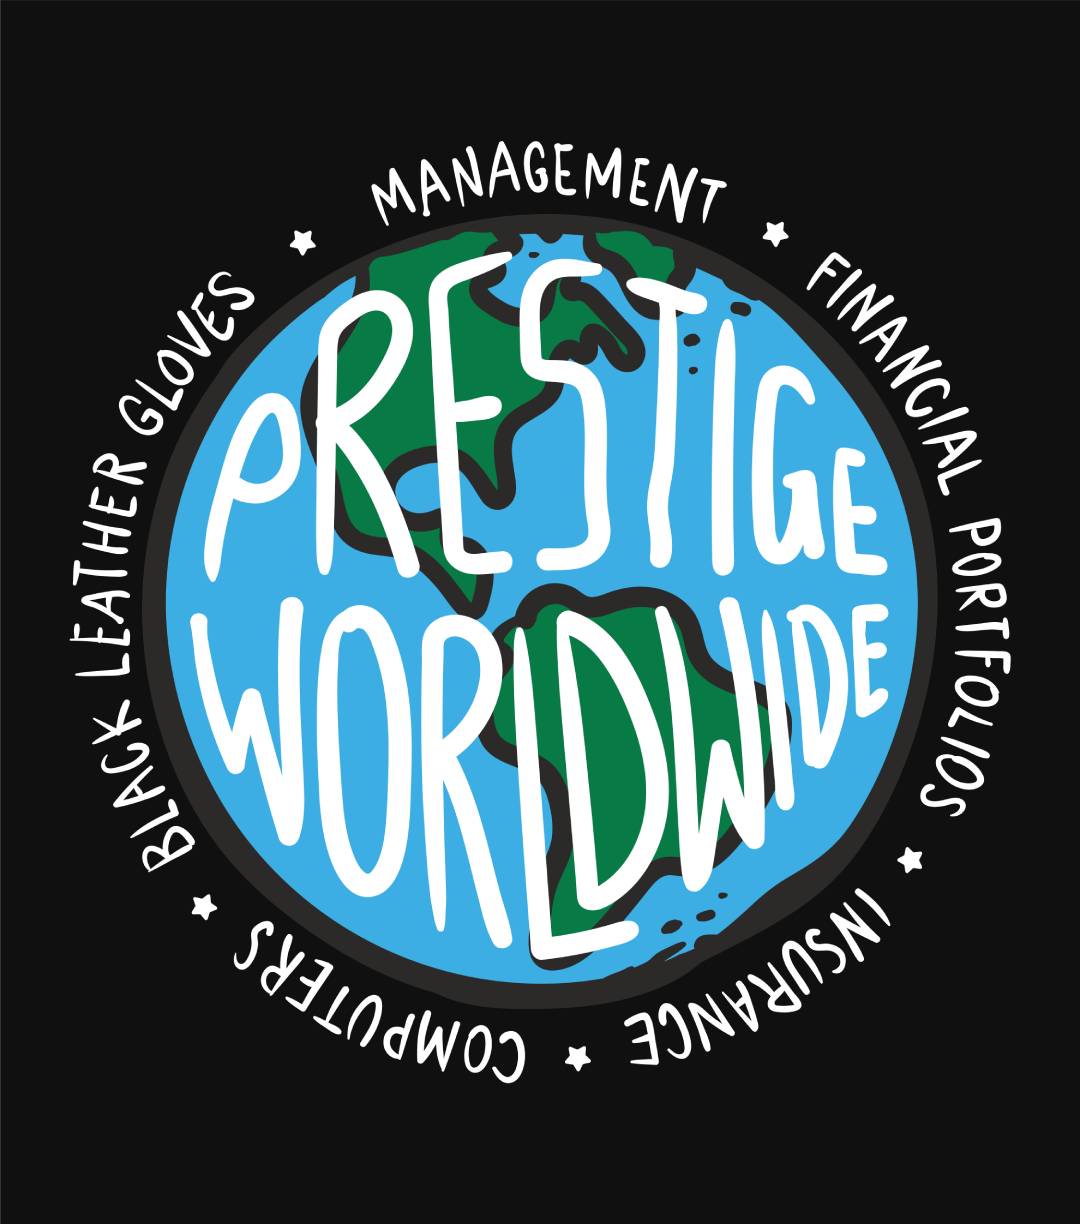 Prestige Worldwide Shirt